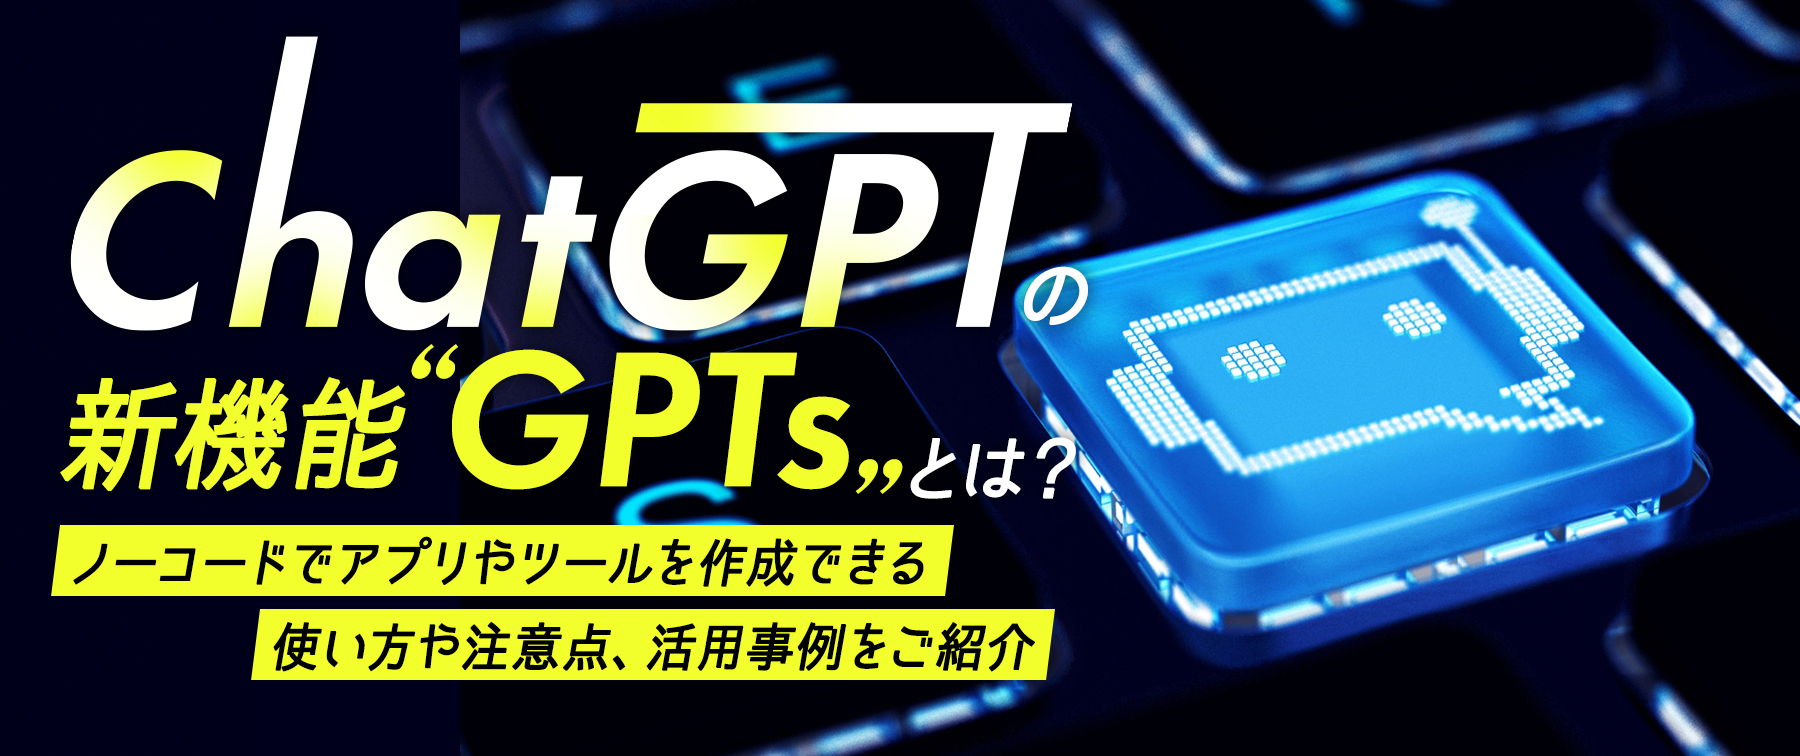 ChatGPTの新機能「GPTs」とは？ノーコードでアプリやツールを作成！使い方や注意点、活用事例をご紹介